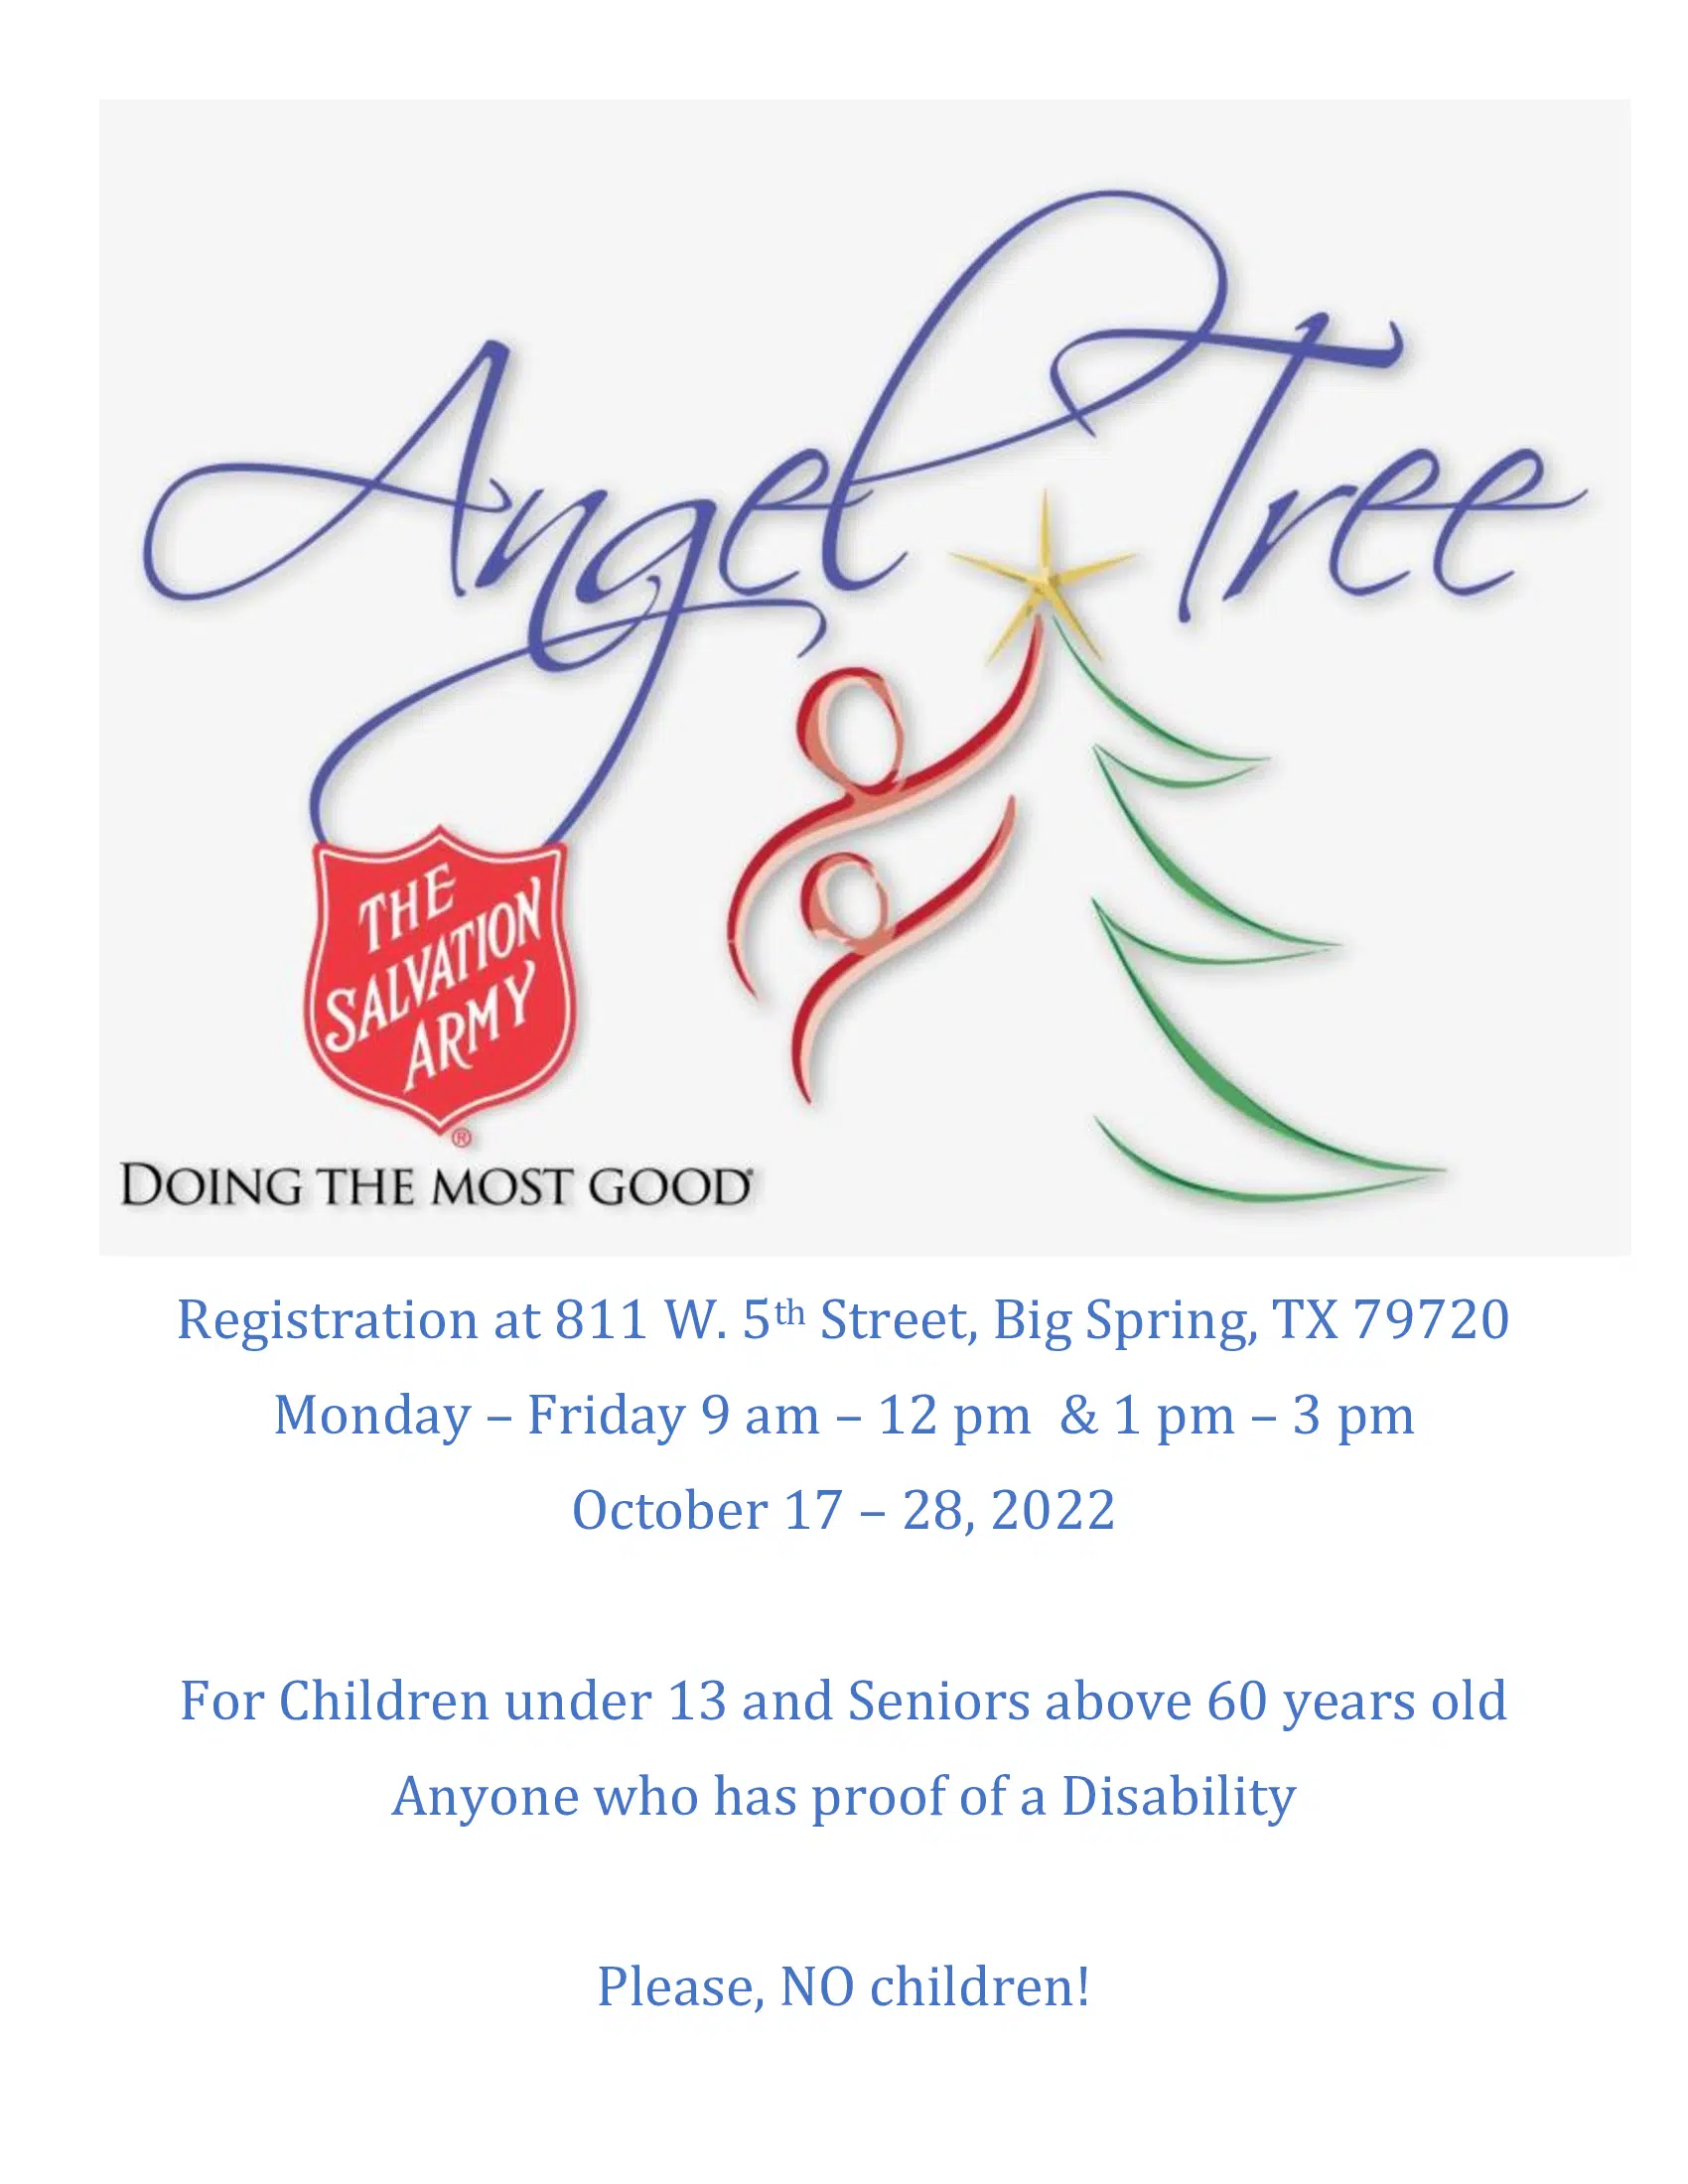 2022 Angel Tree Registration Open Now through Oct. 28th Kbest Media